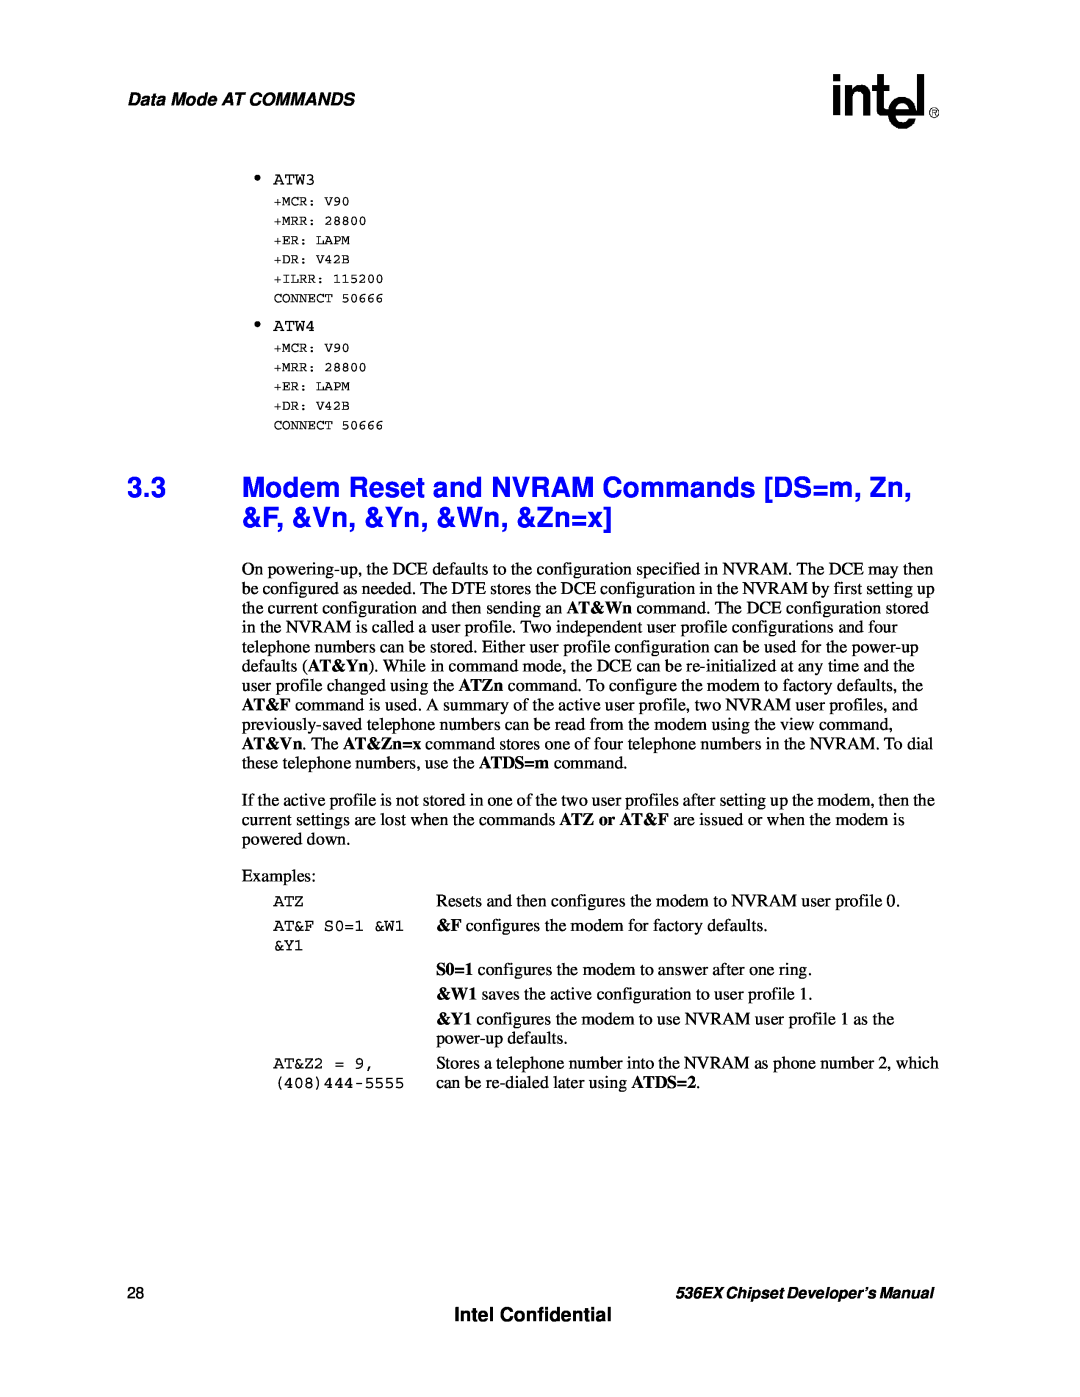 Intel 537EX manual Intel Confidential, Data Mode AT COMMANDS, Examples 